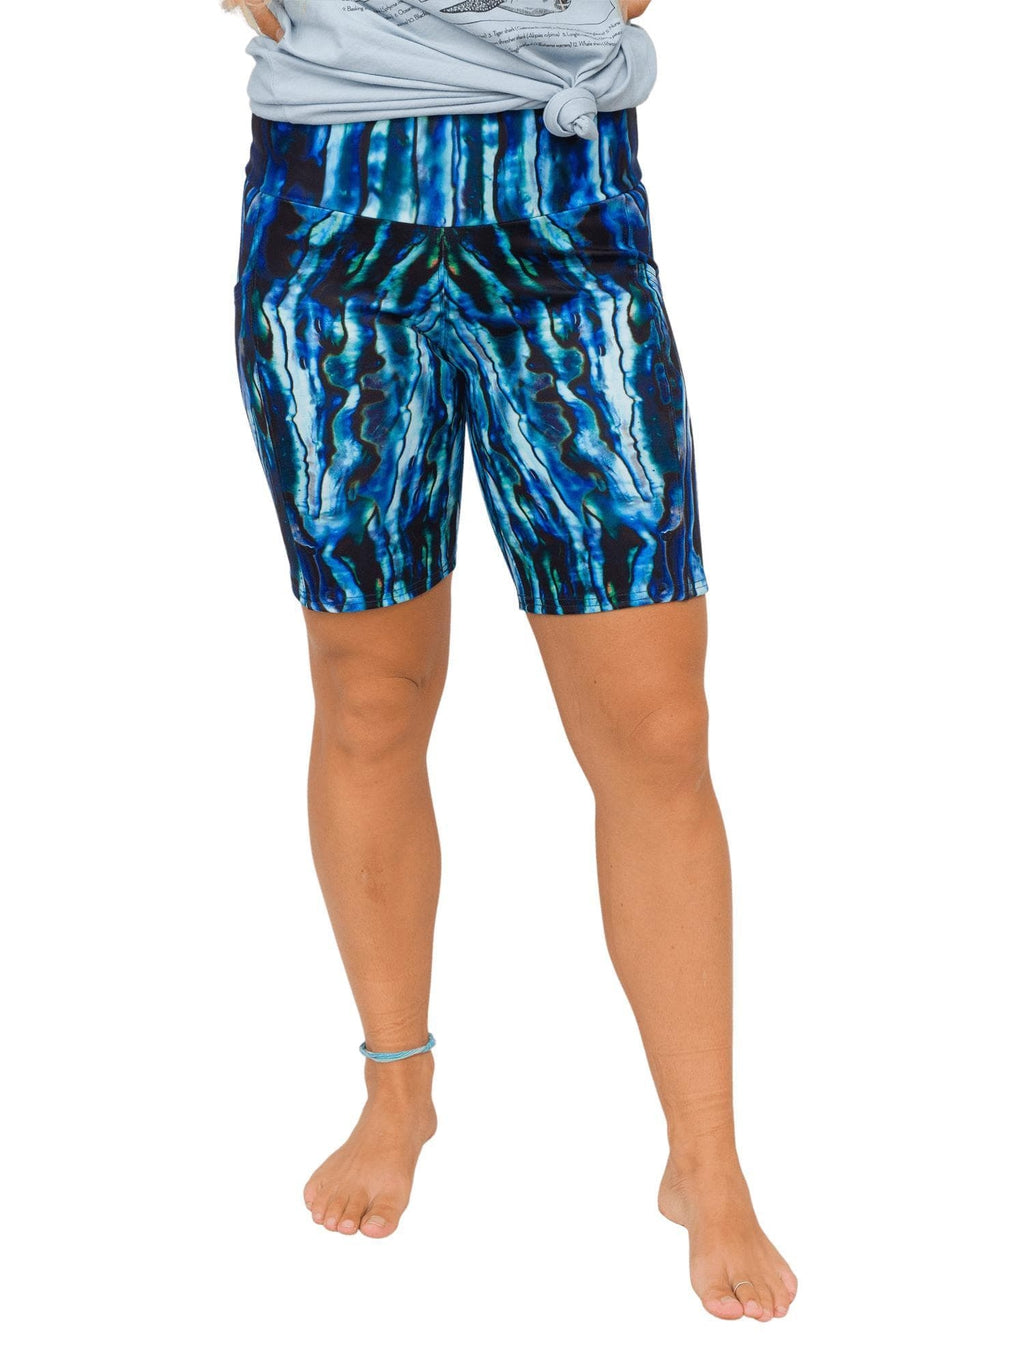 Mojoco Coconut Water Review @Habhitwellness #shorts #shorts